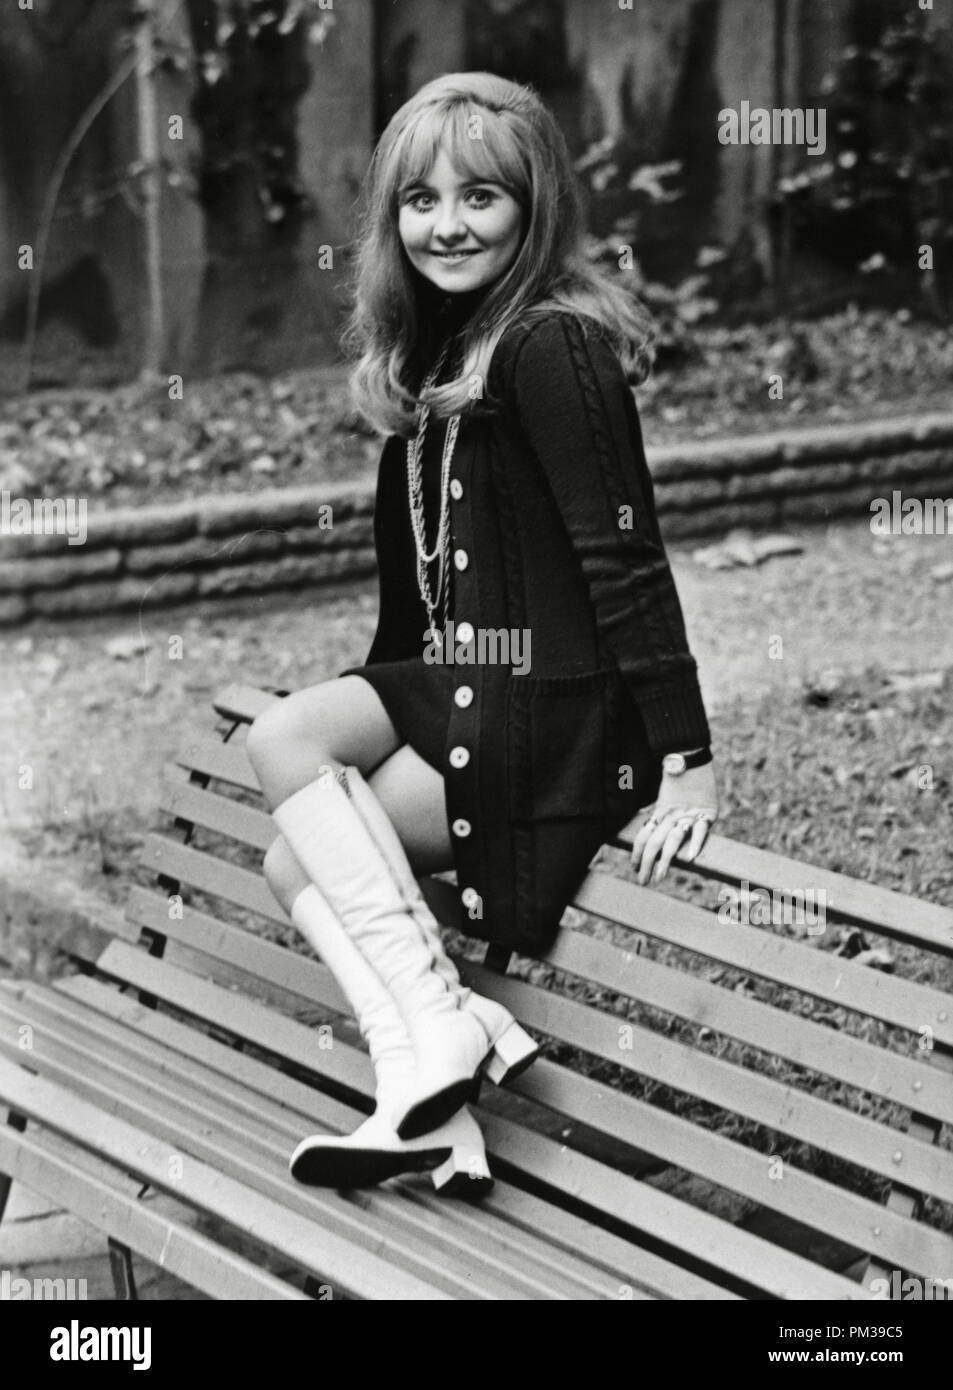 British Pop Singer Lulu, October 1968.    File Reference # 1293 004THA Stock Photo